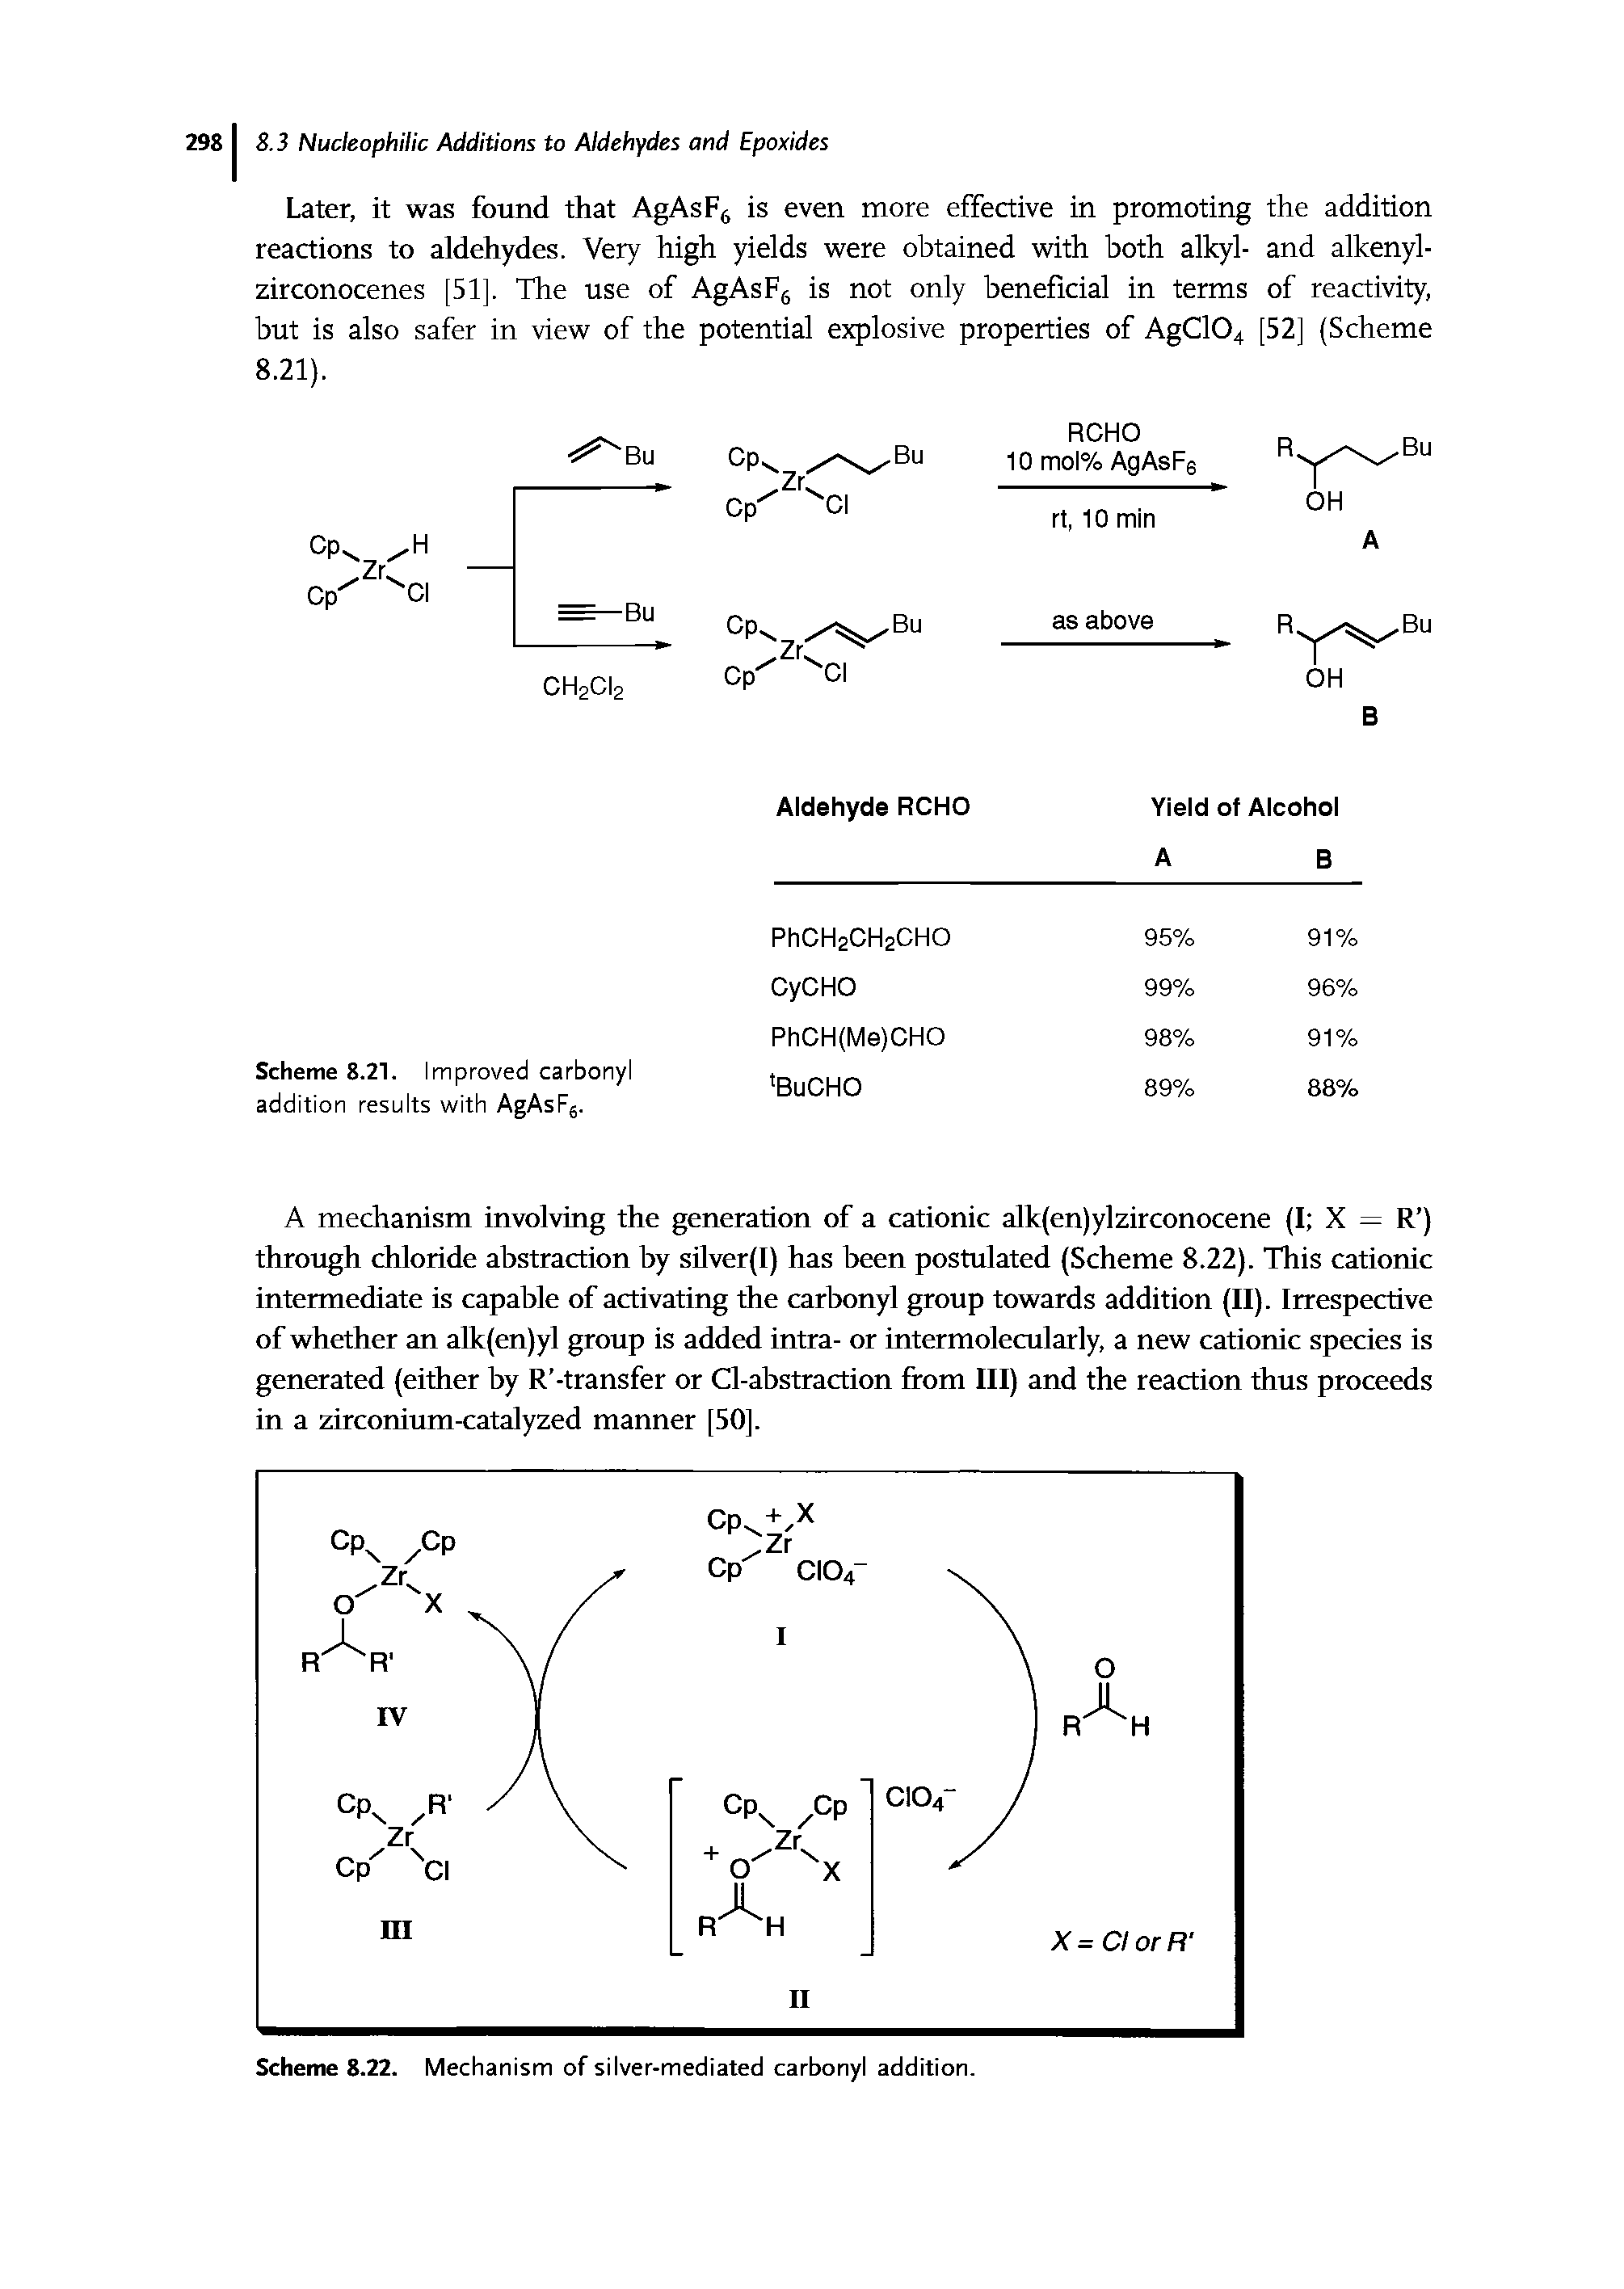 Scheme 8.22. Mechanism of silver-mediated carbonyl addition.